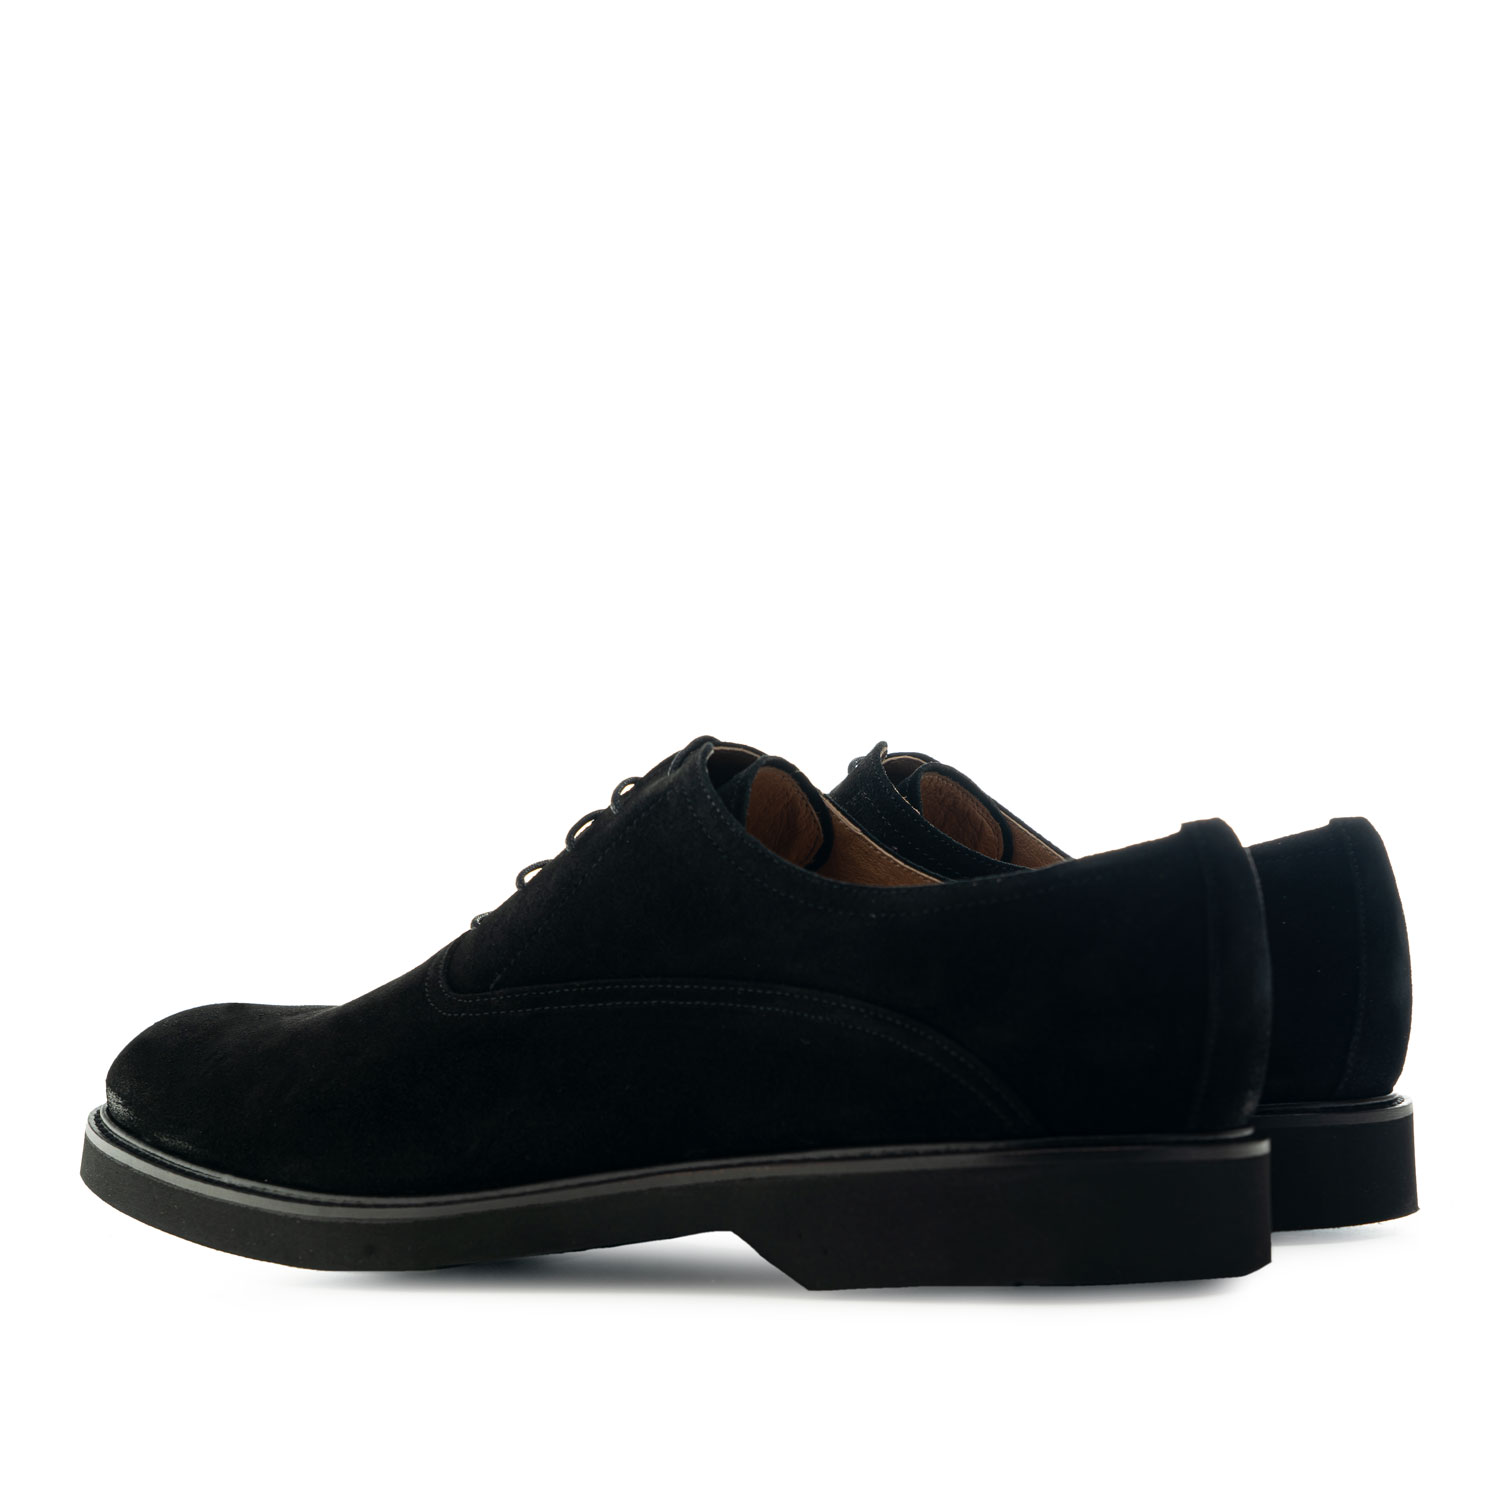 Dress Shoes for Men in Black Split leather 